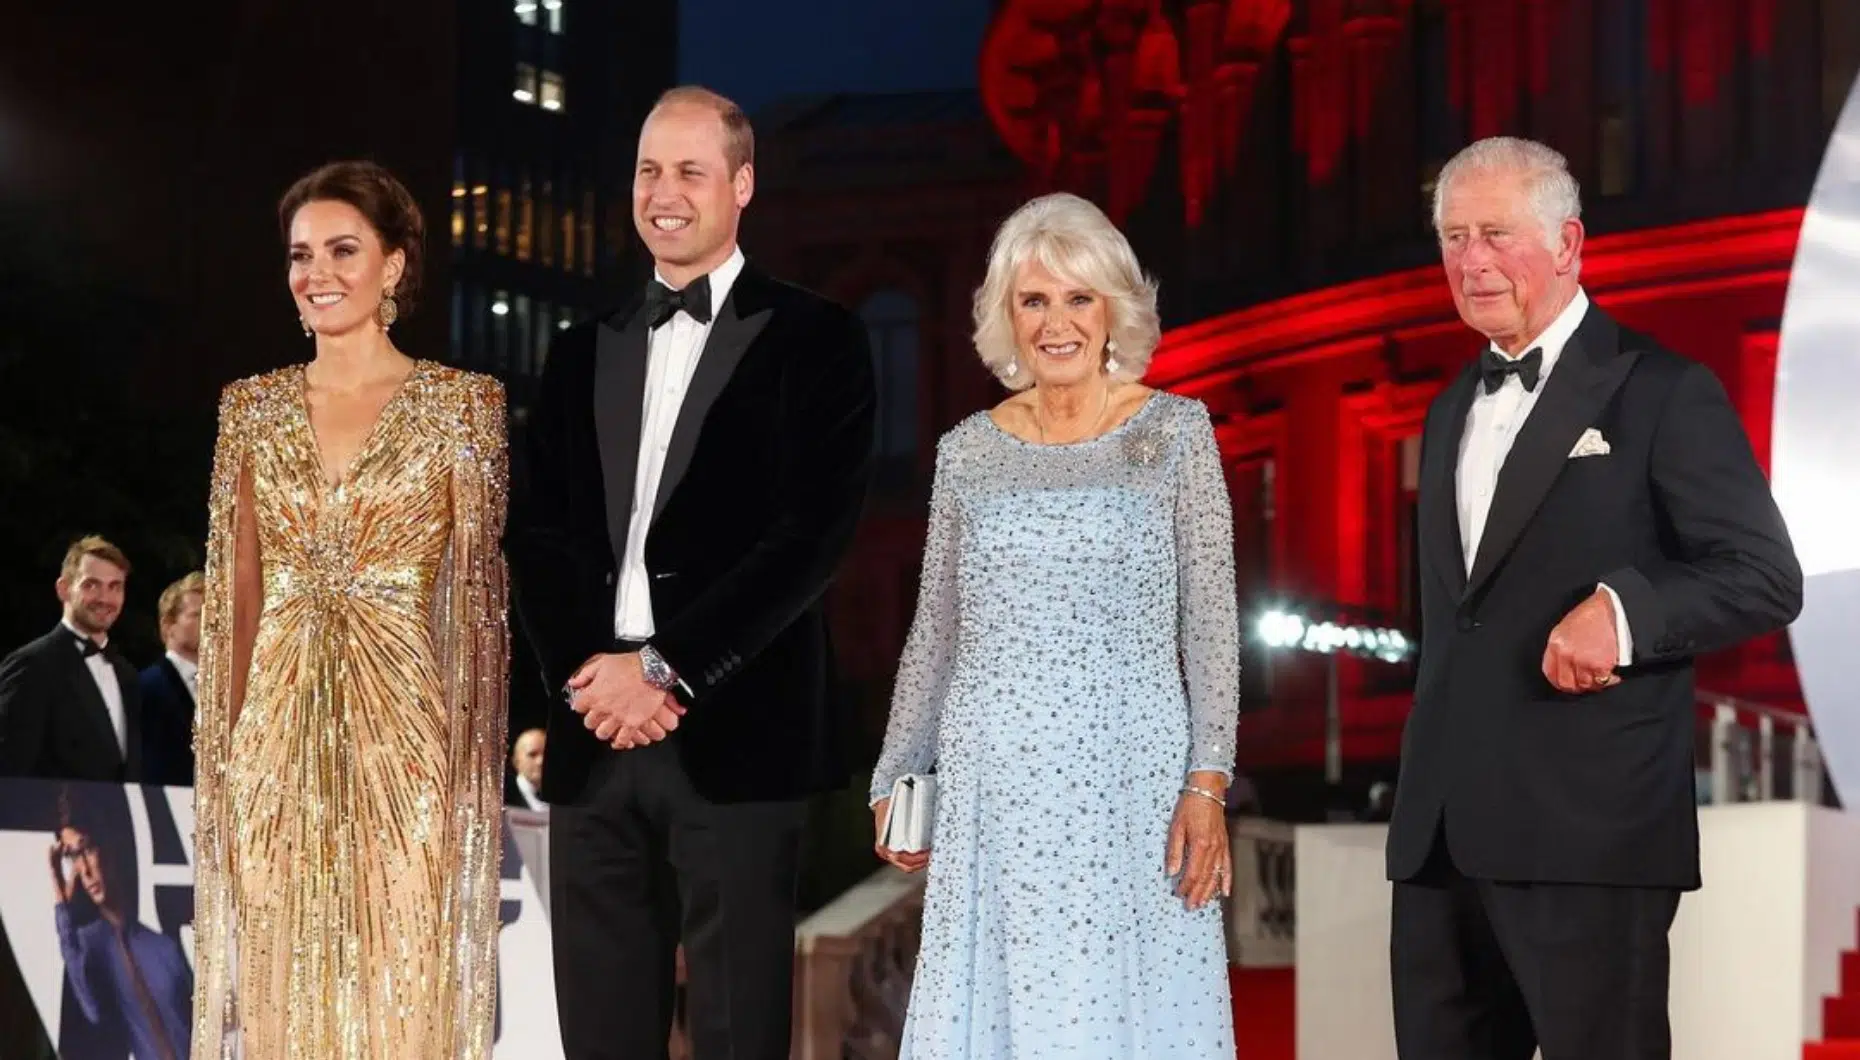 Princípe William, Kate, Princípe Carlos, Camilla